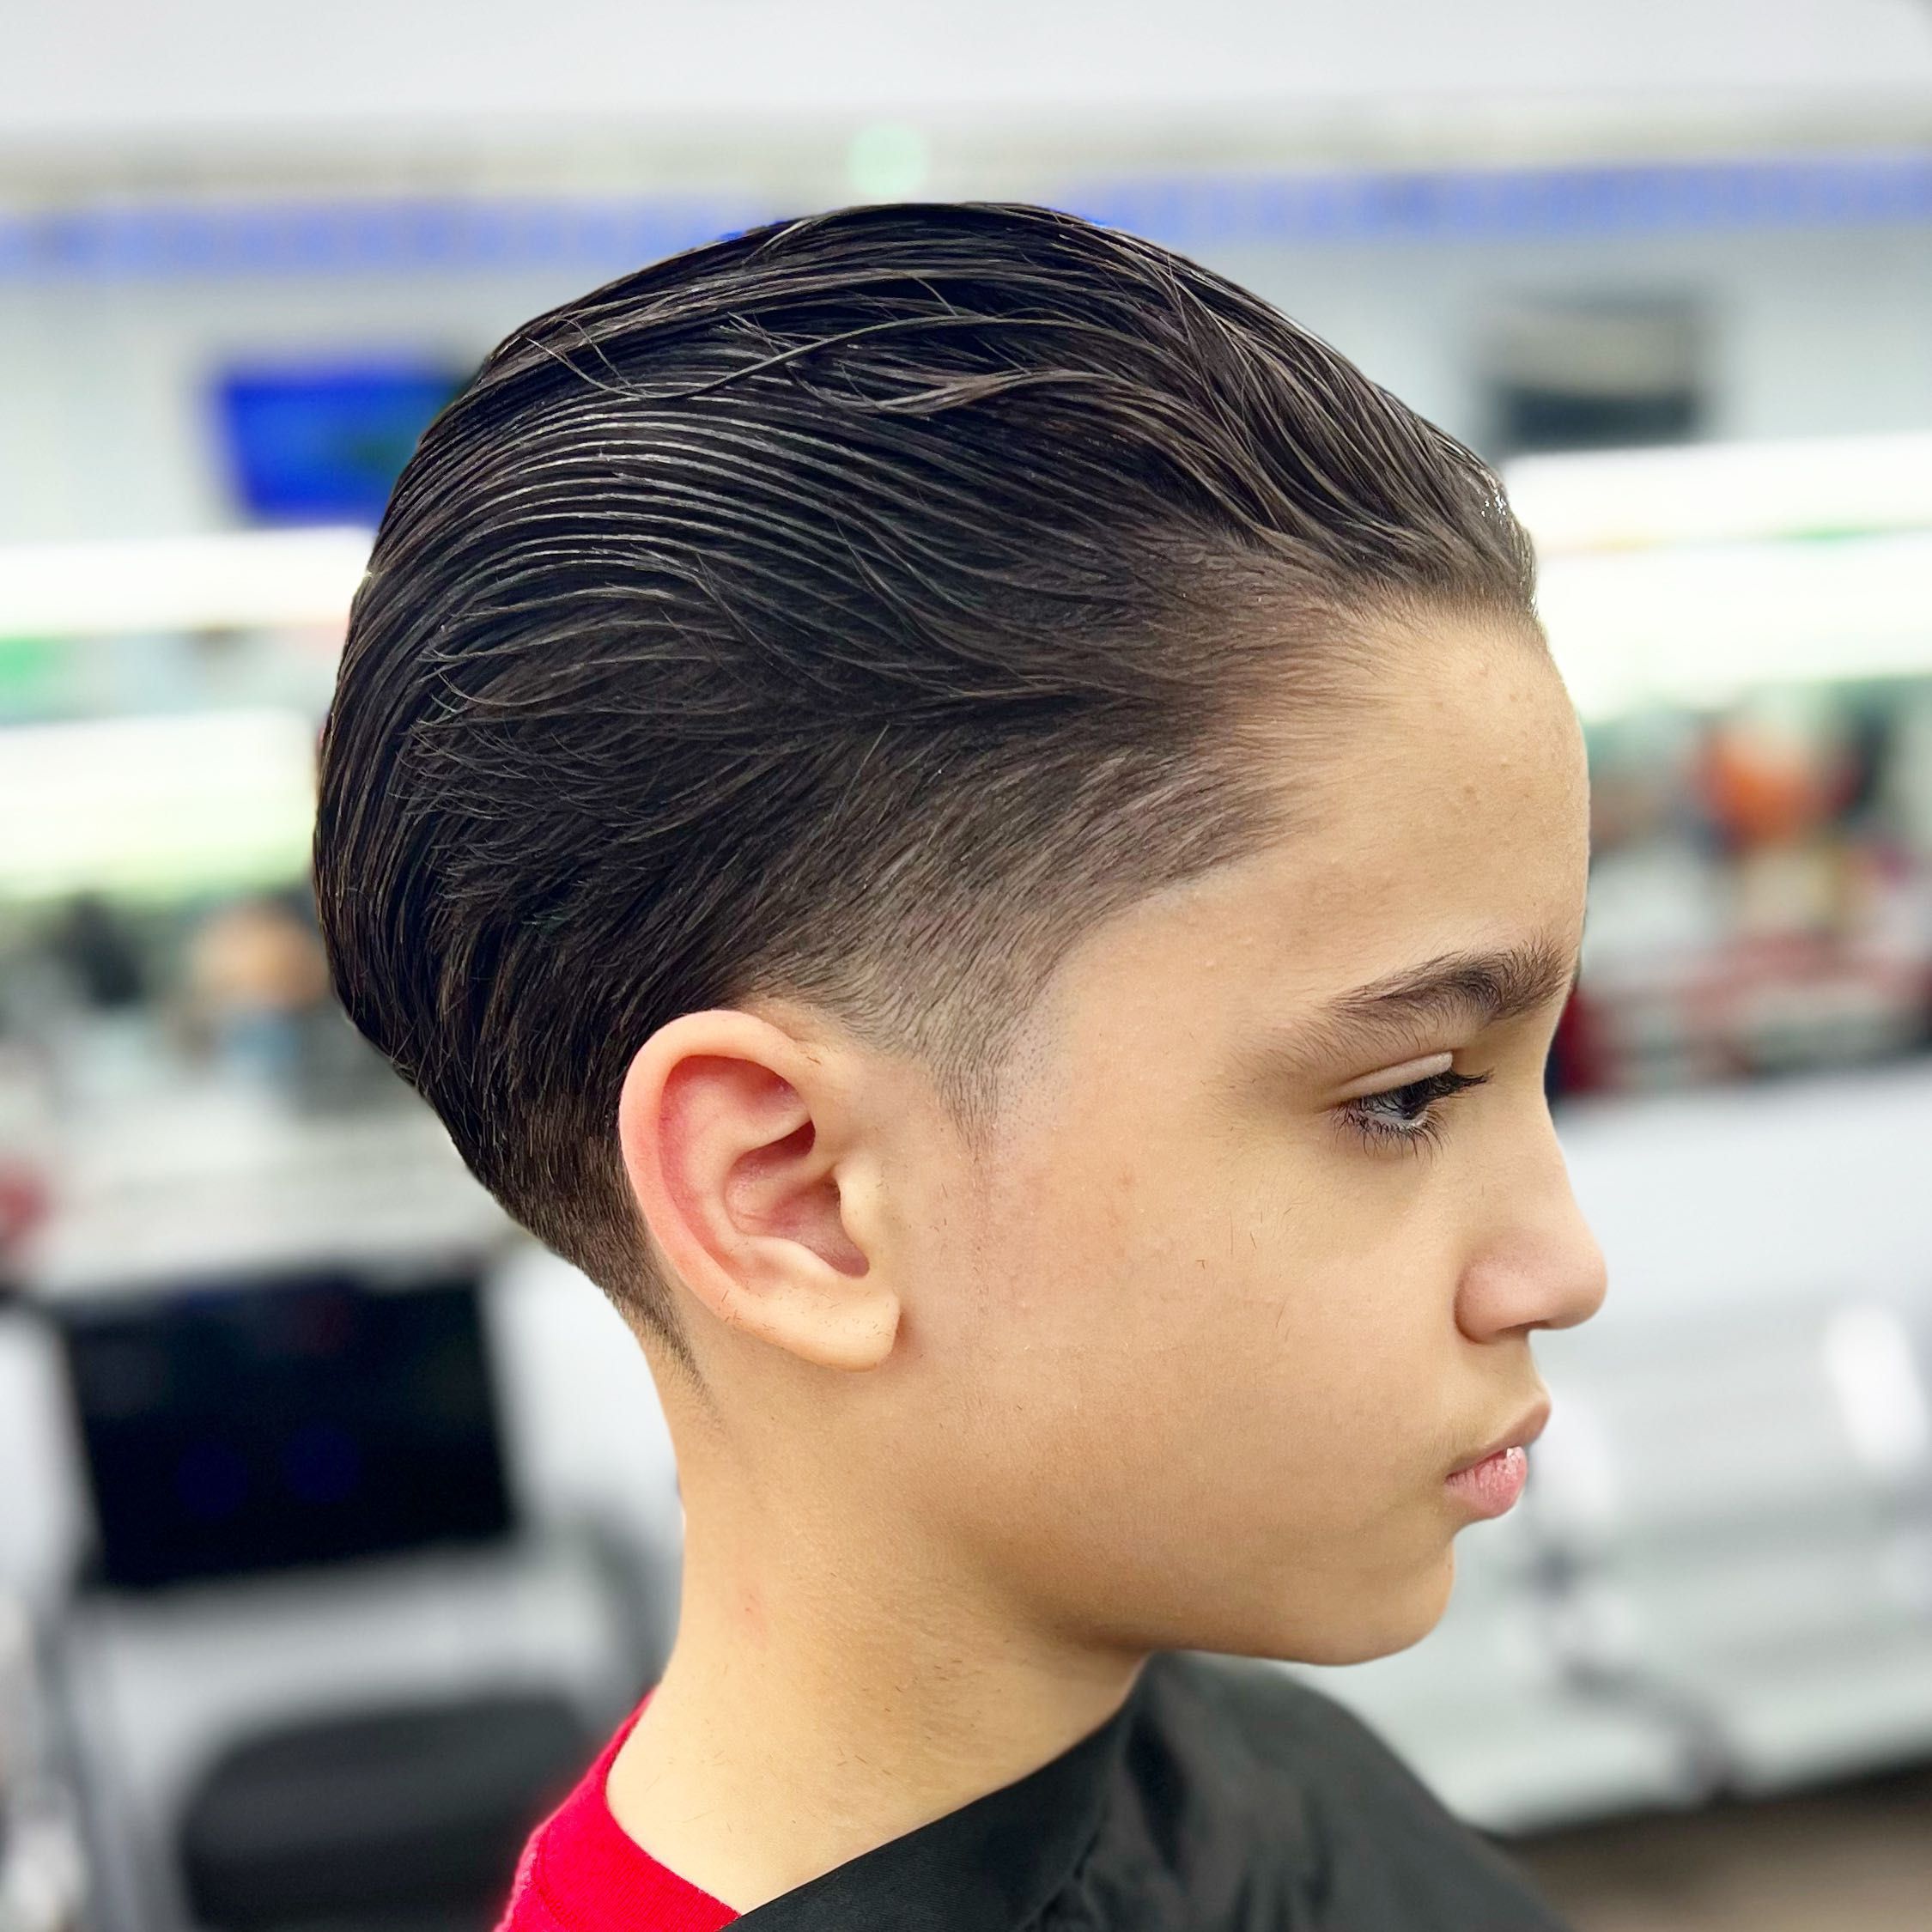 Kids Regular Hair cuts portfolio